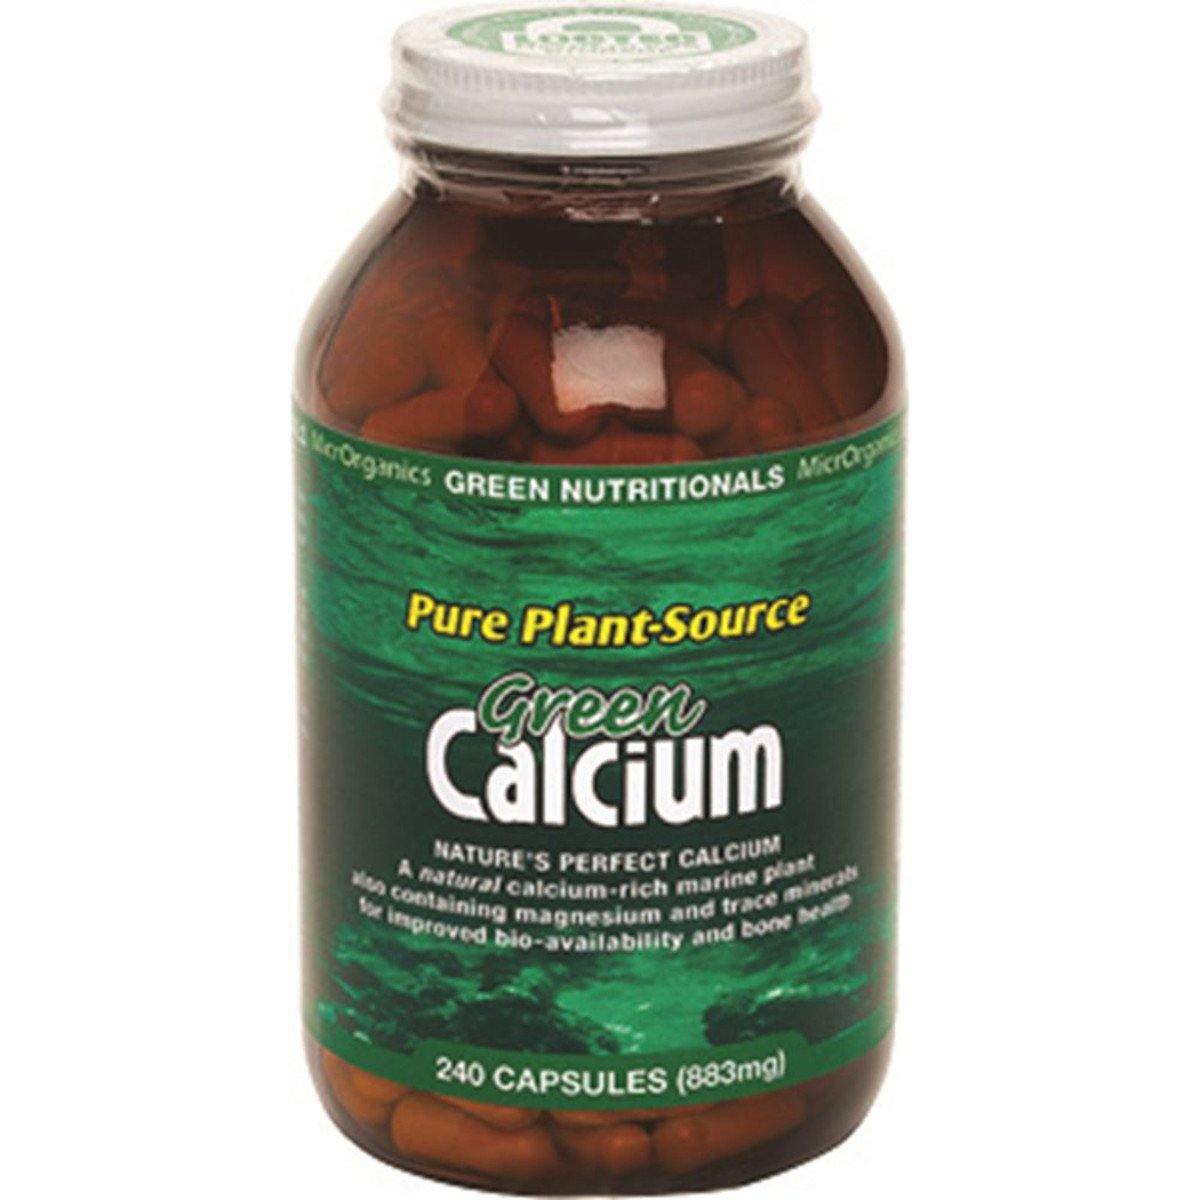 Green Nutritionals Pure Plant-Source Green Calcium 240 Capsules - QVM Vitamins™